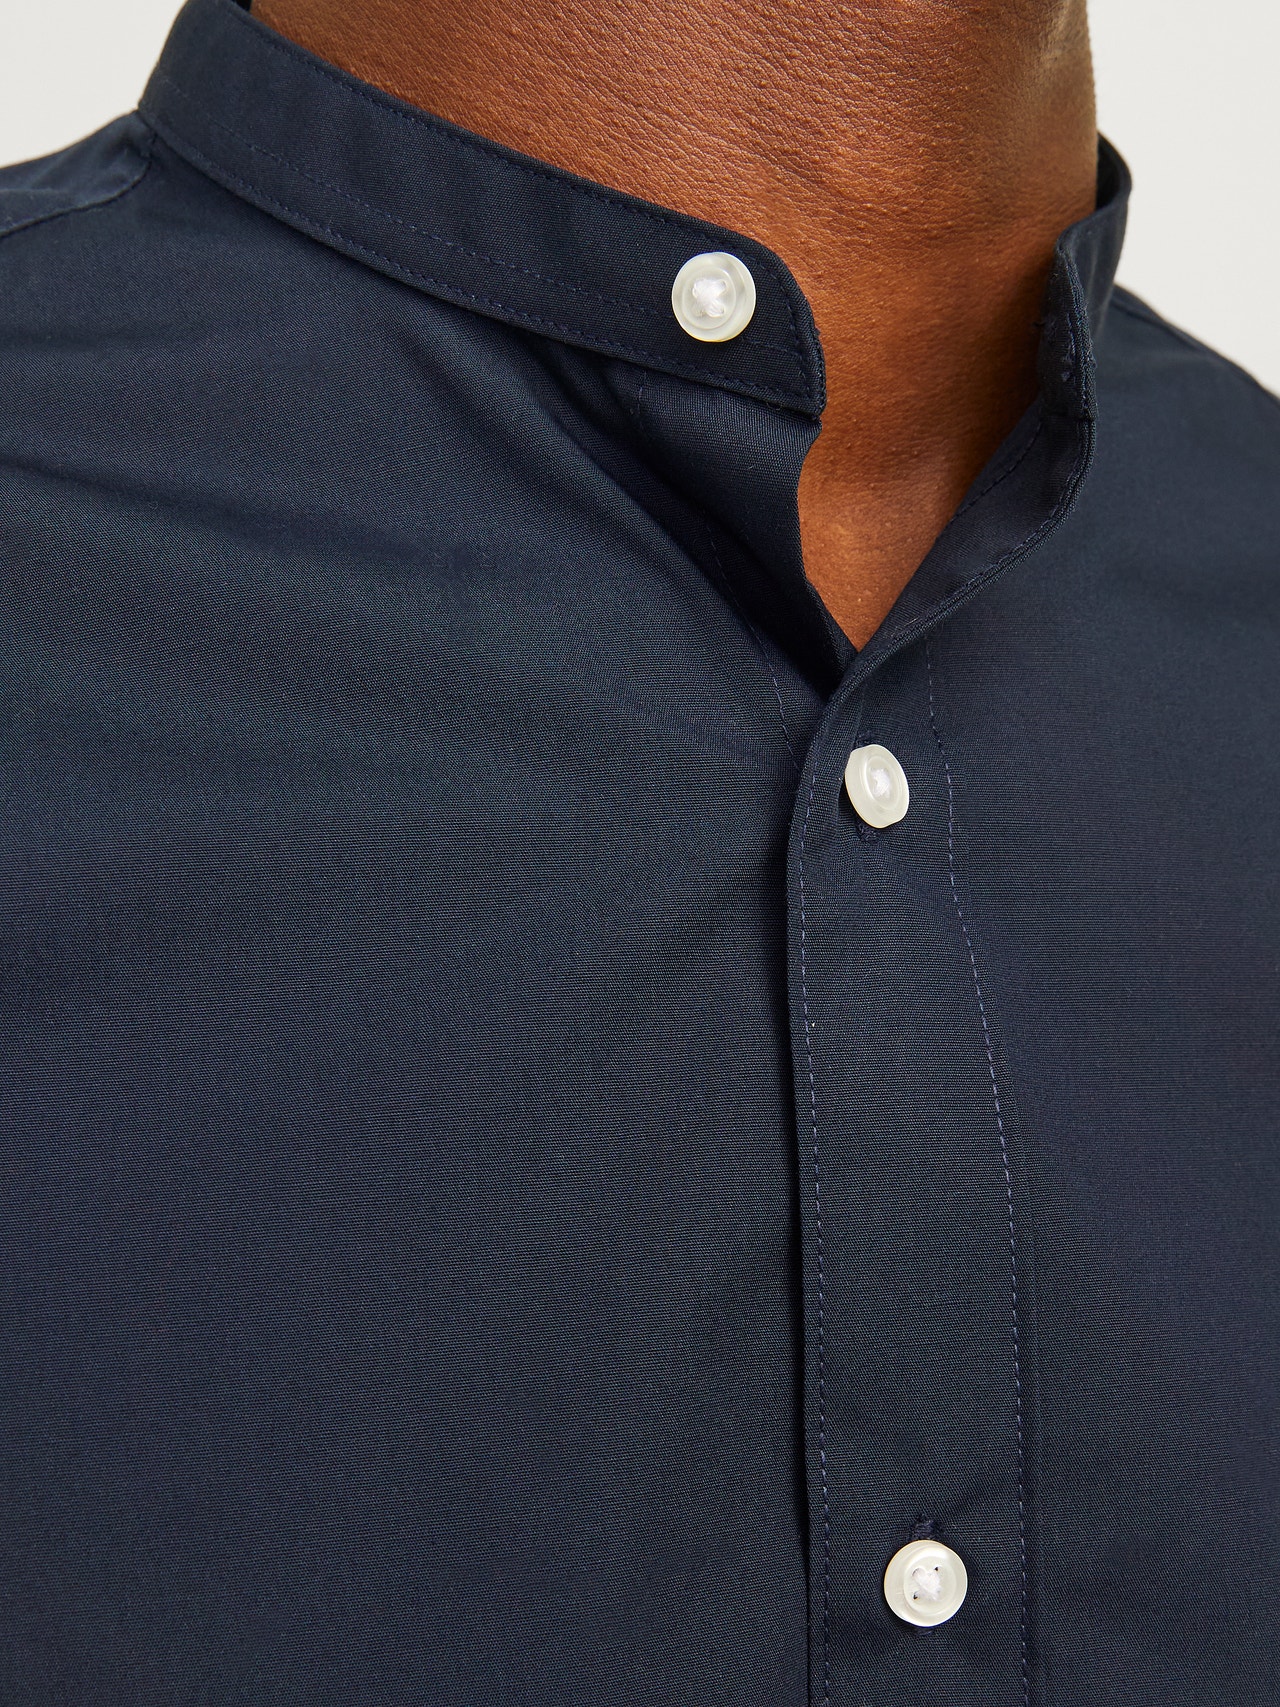 Jack & Jones Camisa Casual Slim Fit -Navy Blazer - 12205921